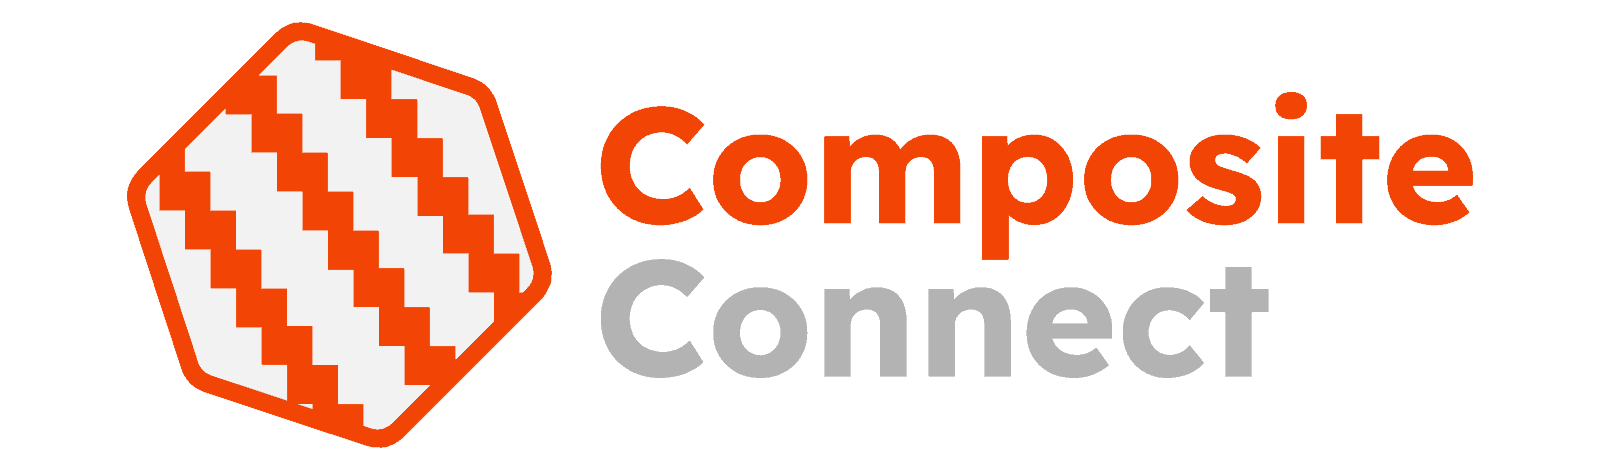 Composite Connect Logo